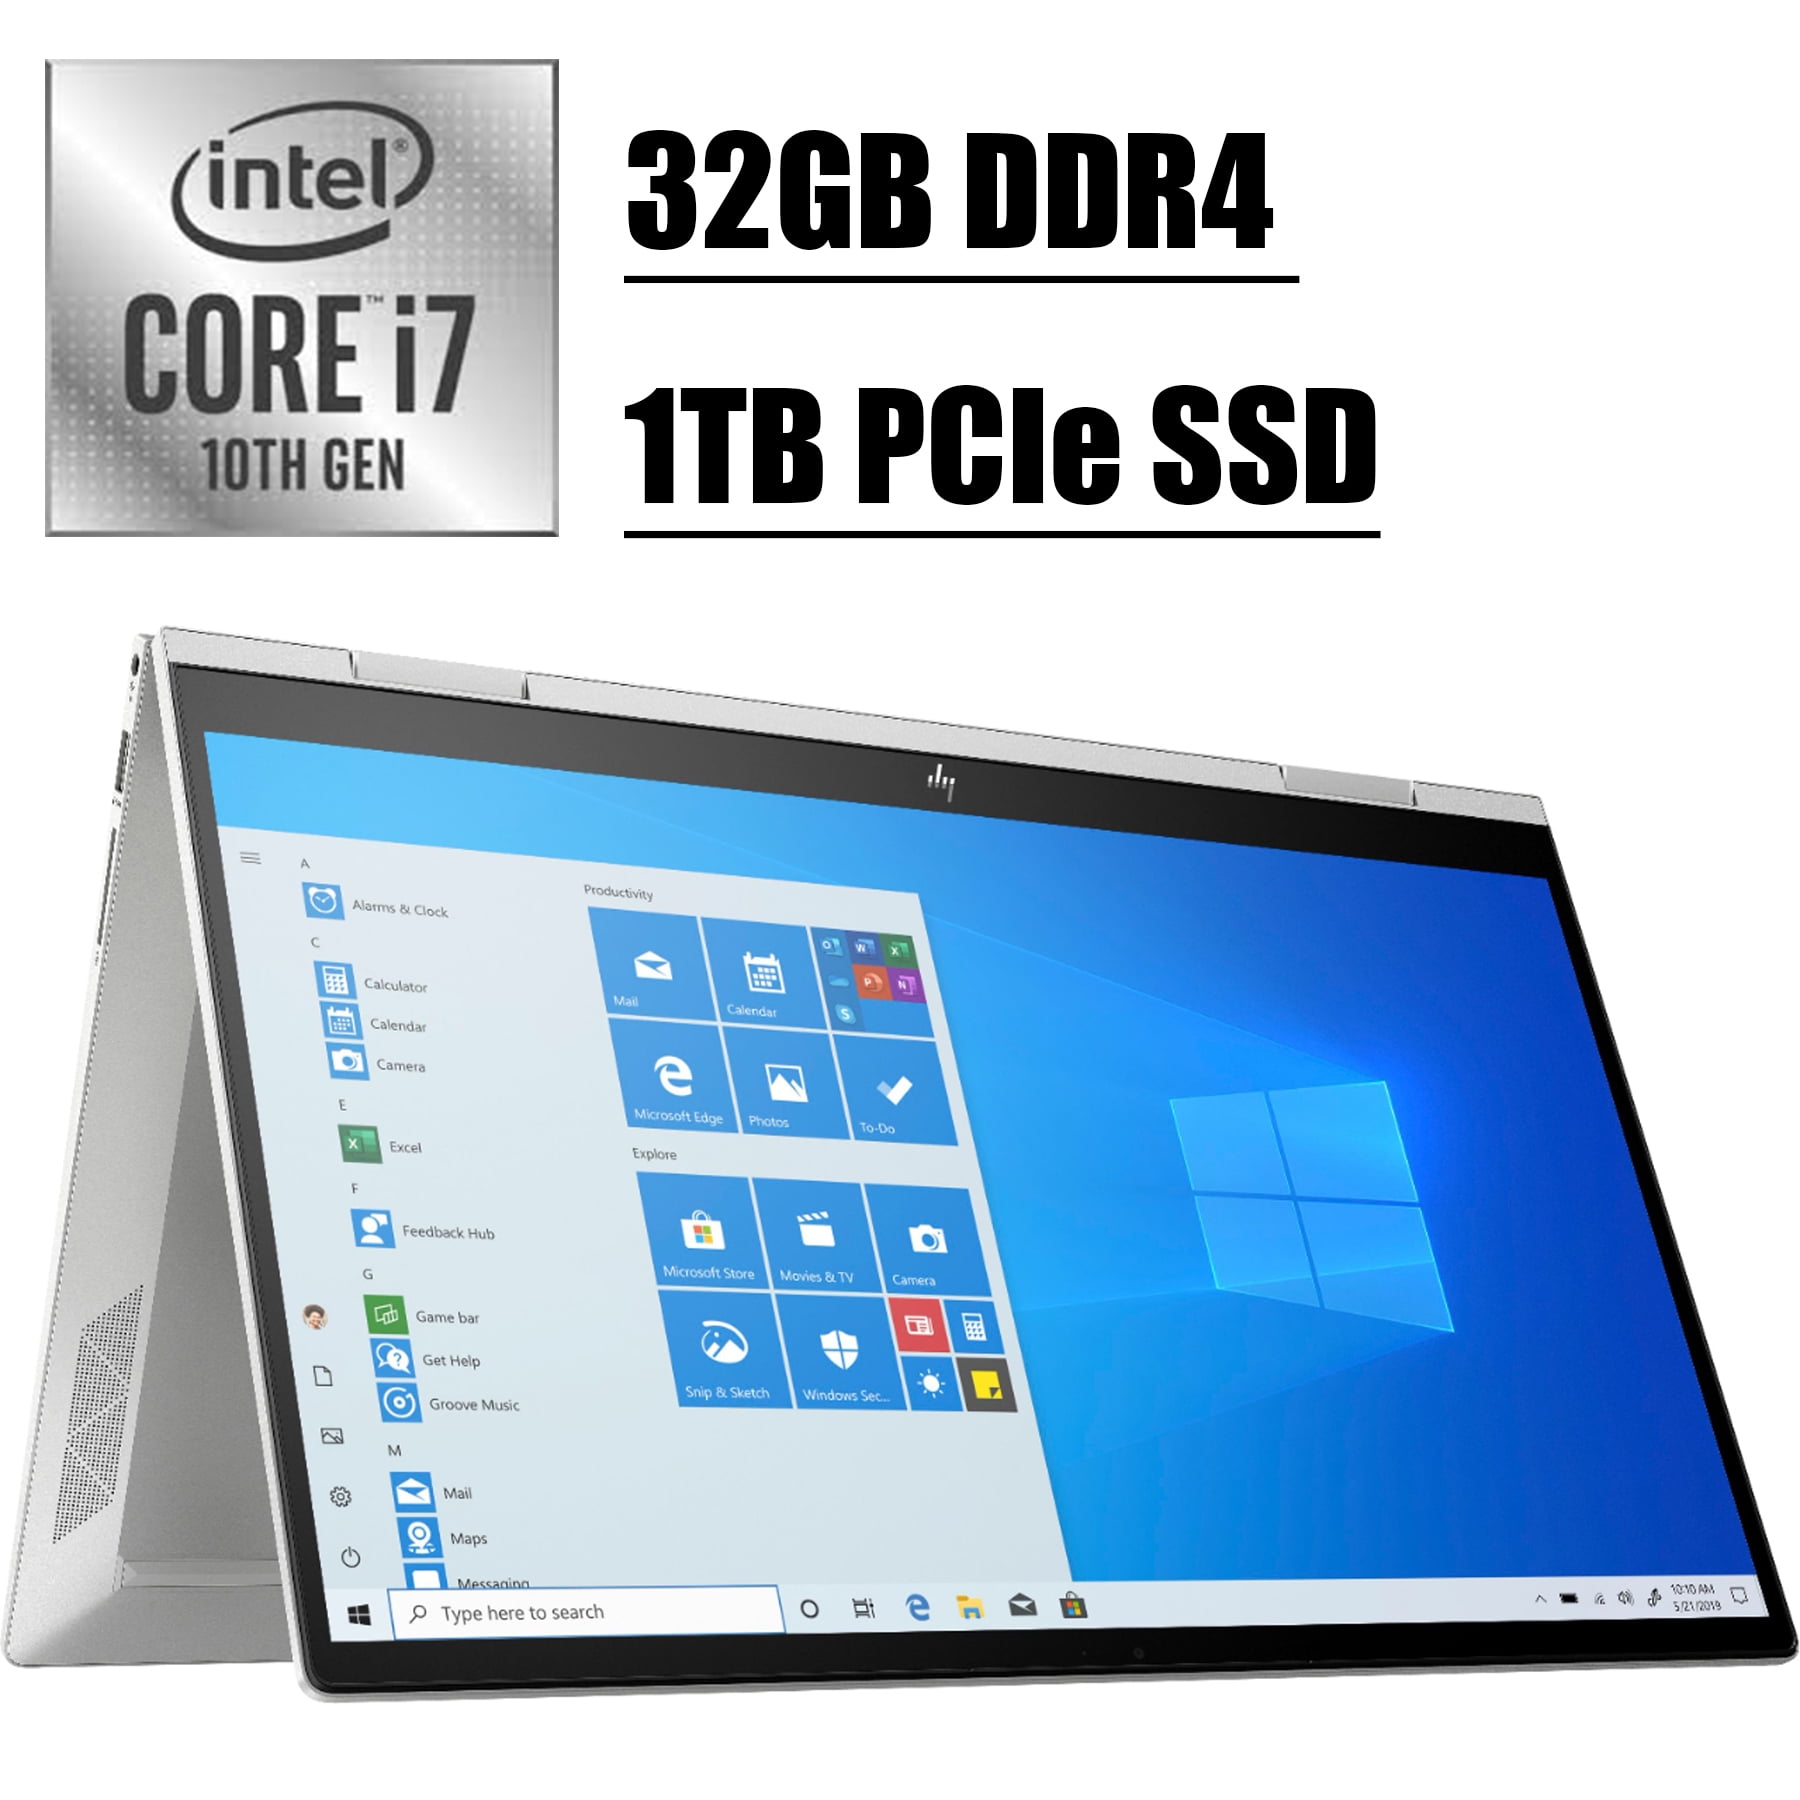 2020 Premium HP x360 15 2-in-1 Laptop I 15.6 Inch FHD IPS Touchscreen display I 10th Gen Intel Quad-Core i7-1065G7 Processor I 32GB DDR4 1TB PCIe I Backlit KB Fingerprint